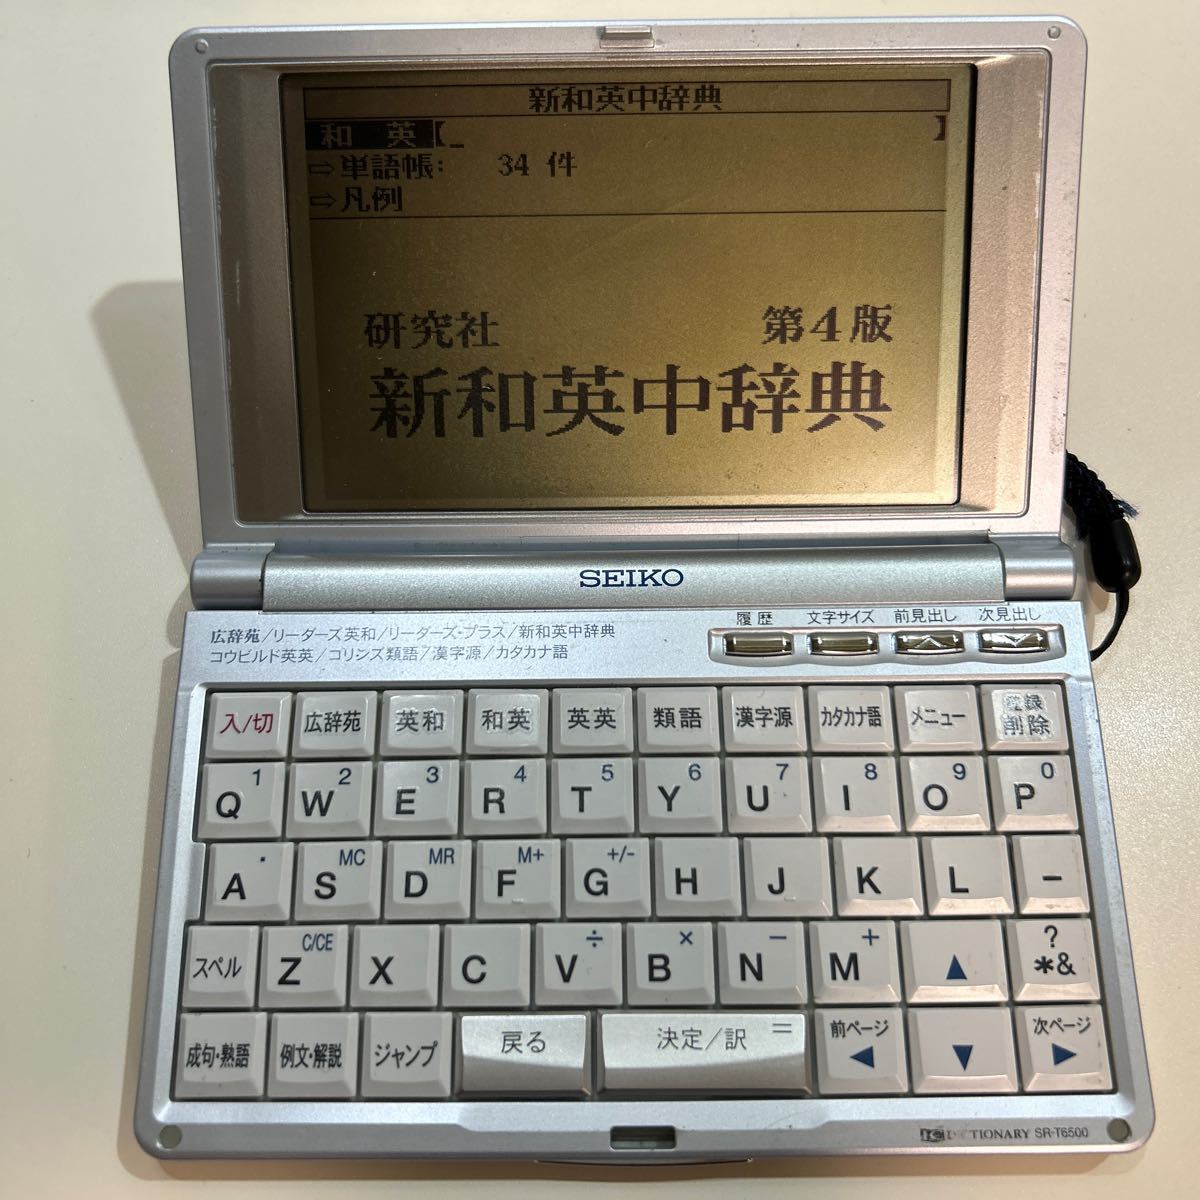 *SEIKO SR-T6500 computerized dictionary 